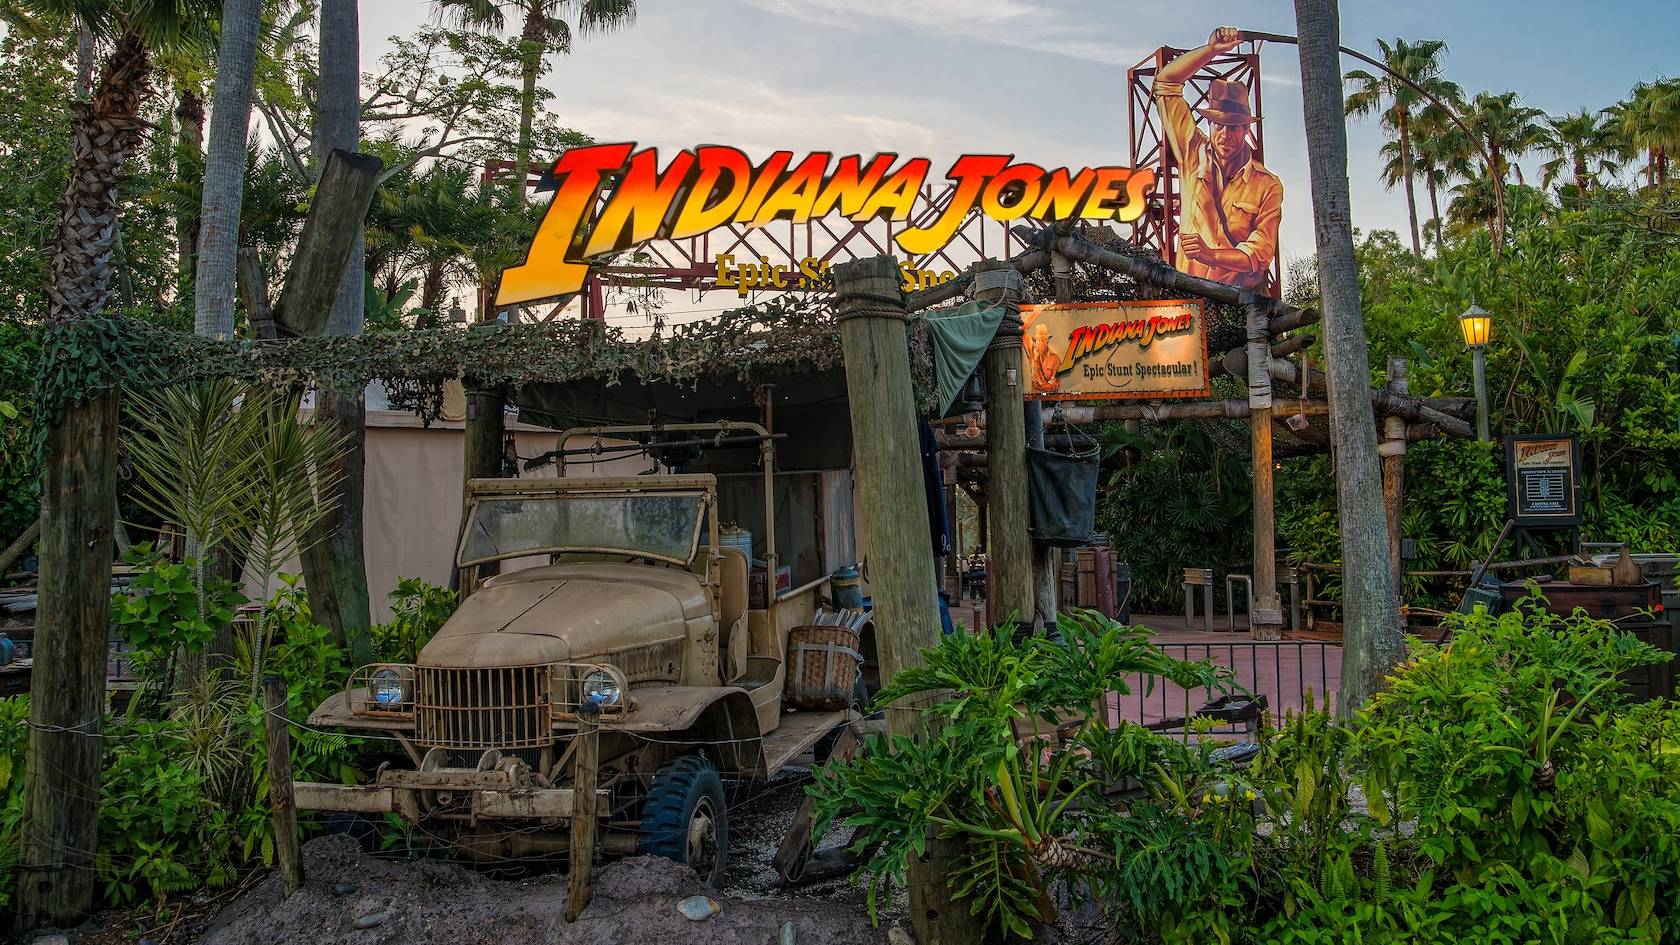 Indiana Jones Epic Stunt Spectacular! closing briefly next week